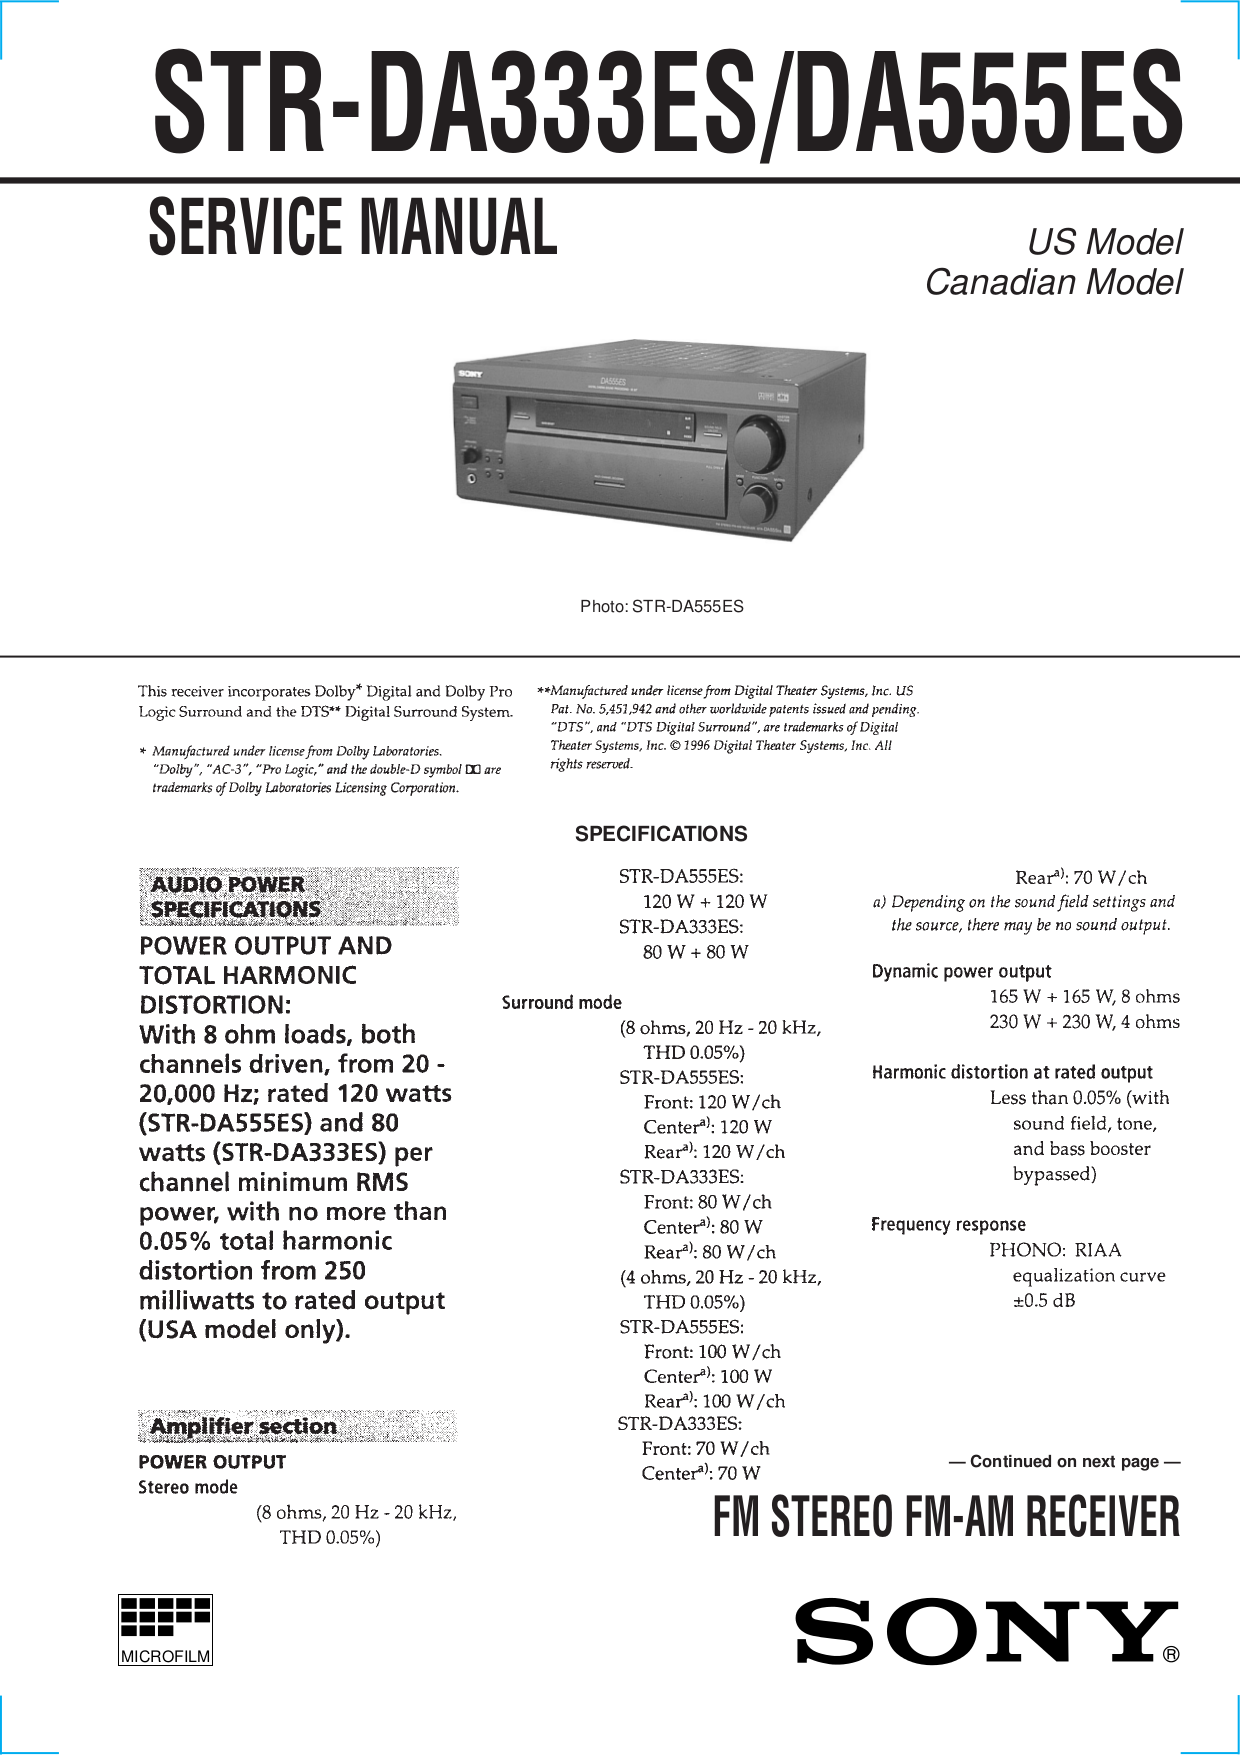 Download free pdf for Sony RM-LJ302 Remote Control manual